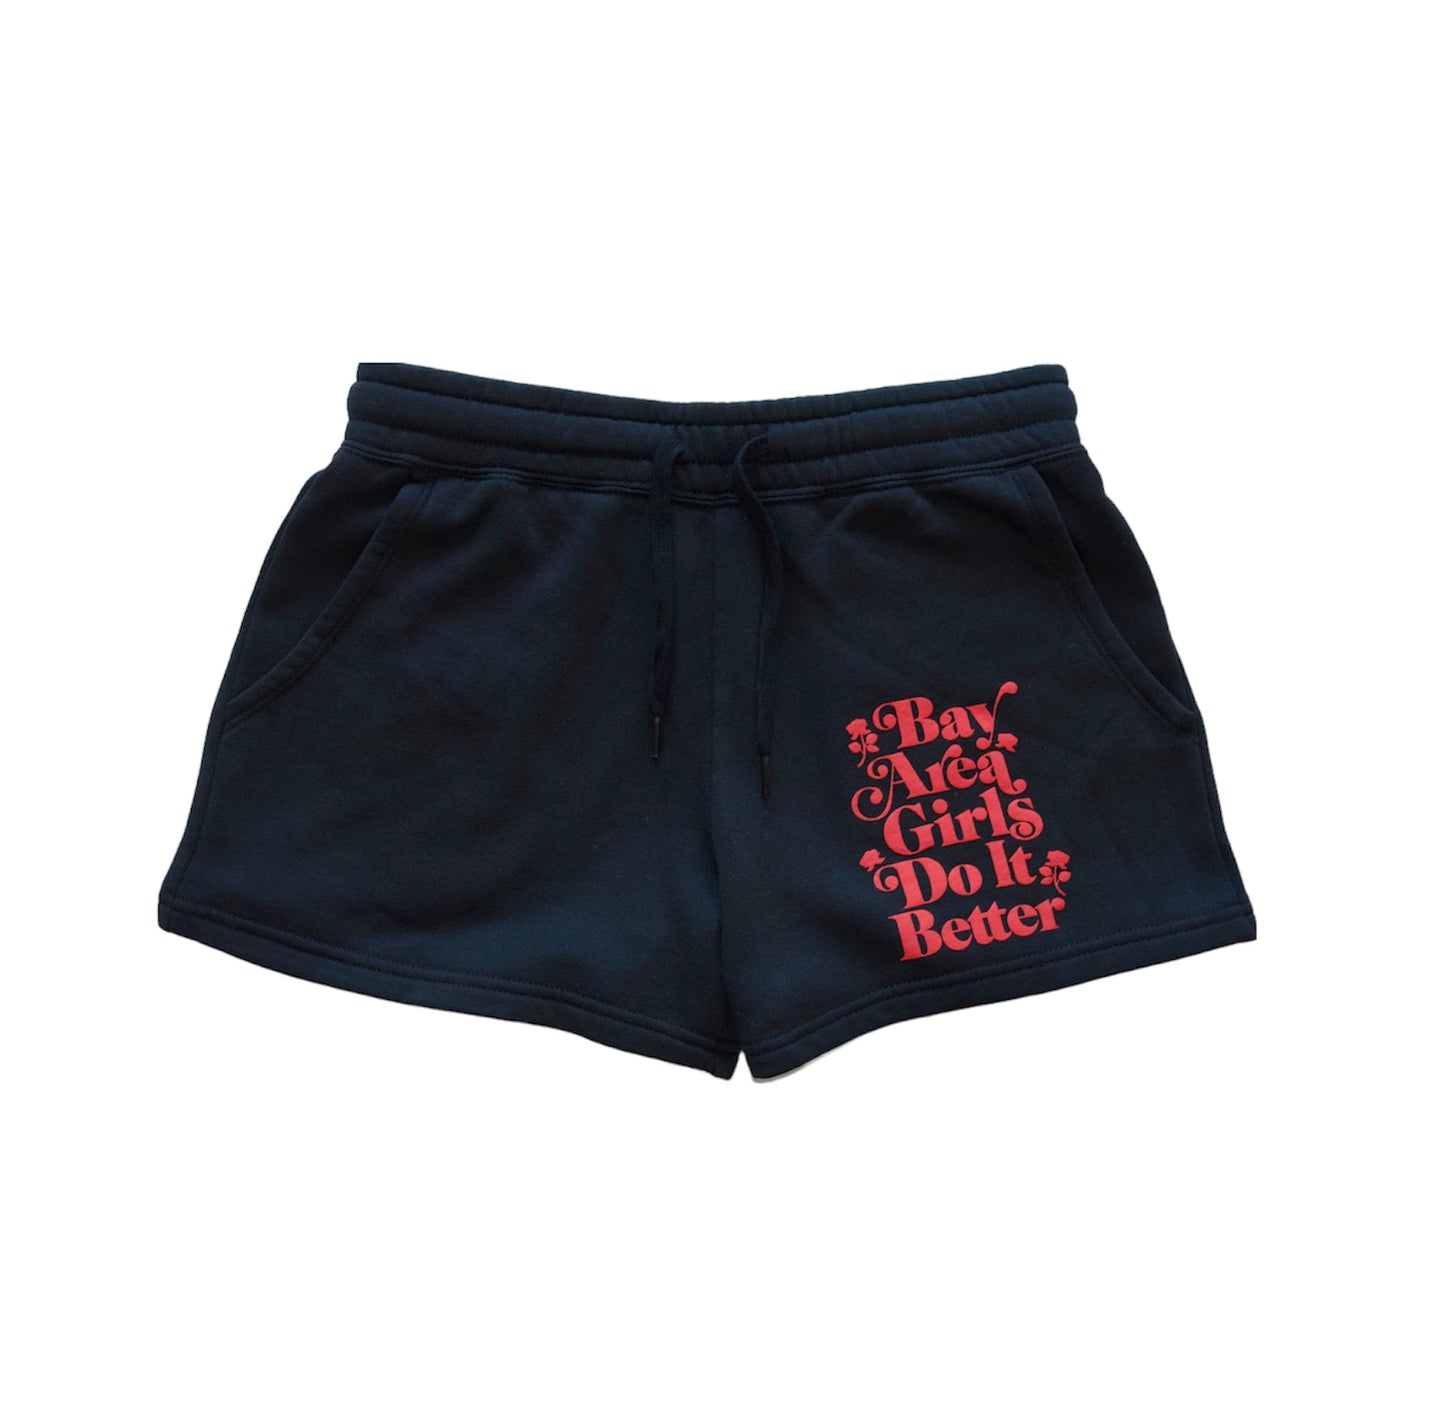 Black “Bay Area Girls Do It Better” Fleece Shorts